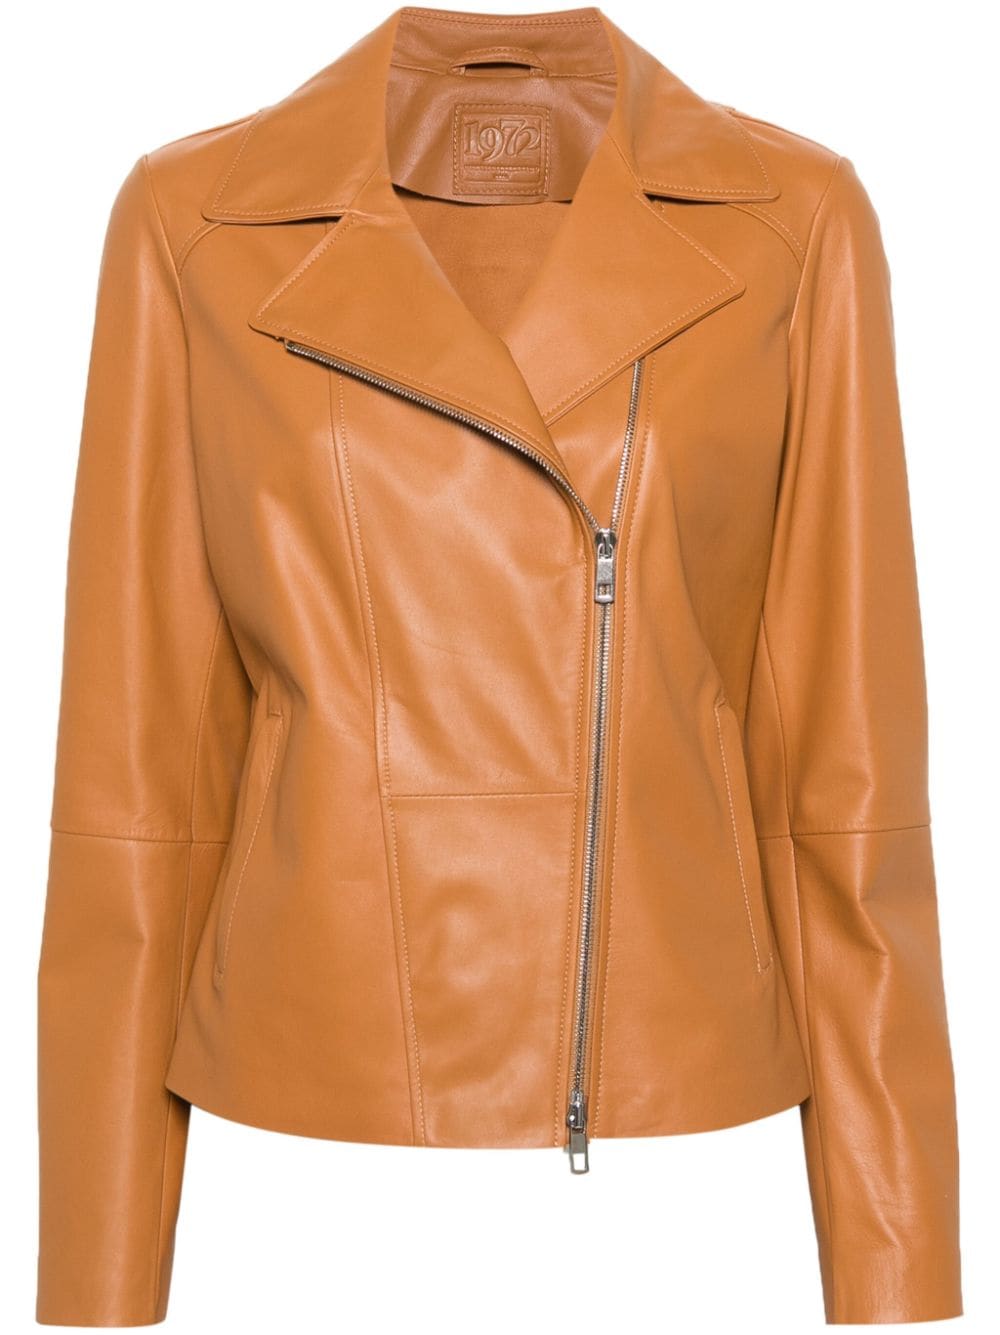 Desa 1972 off-centre-fastening leather jacket - Brown